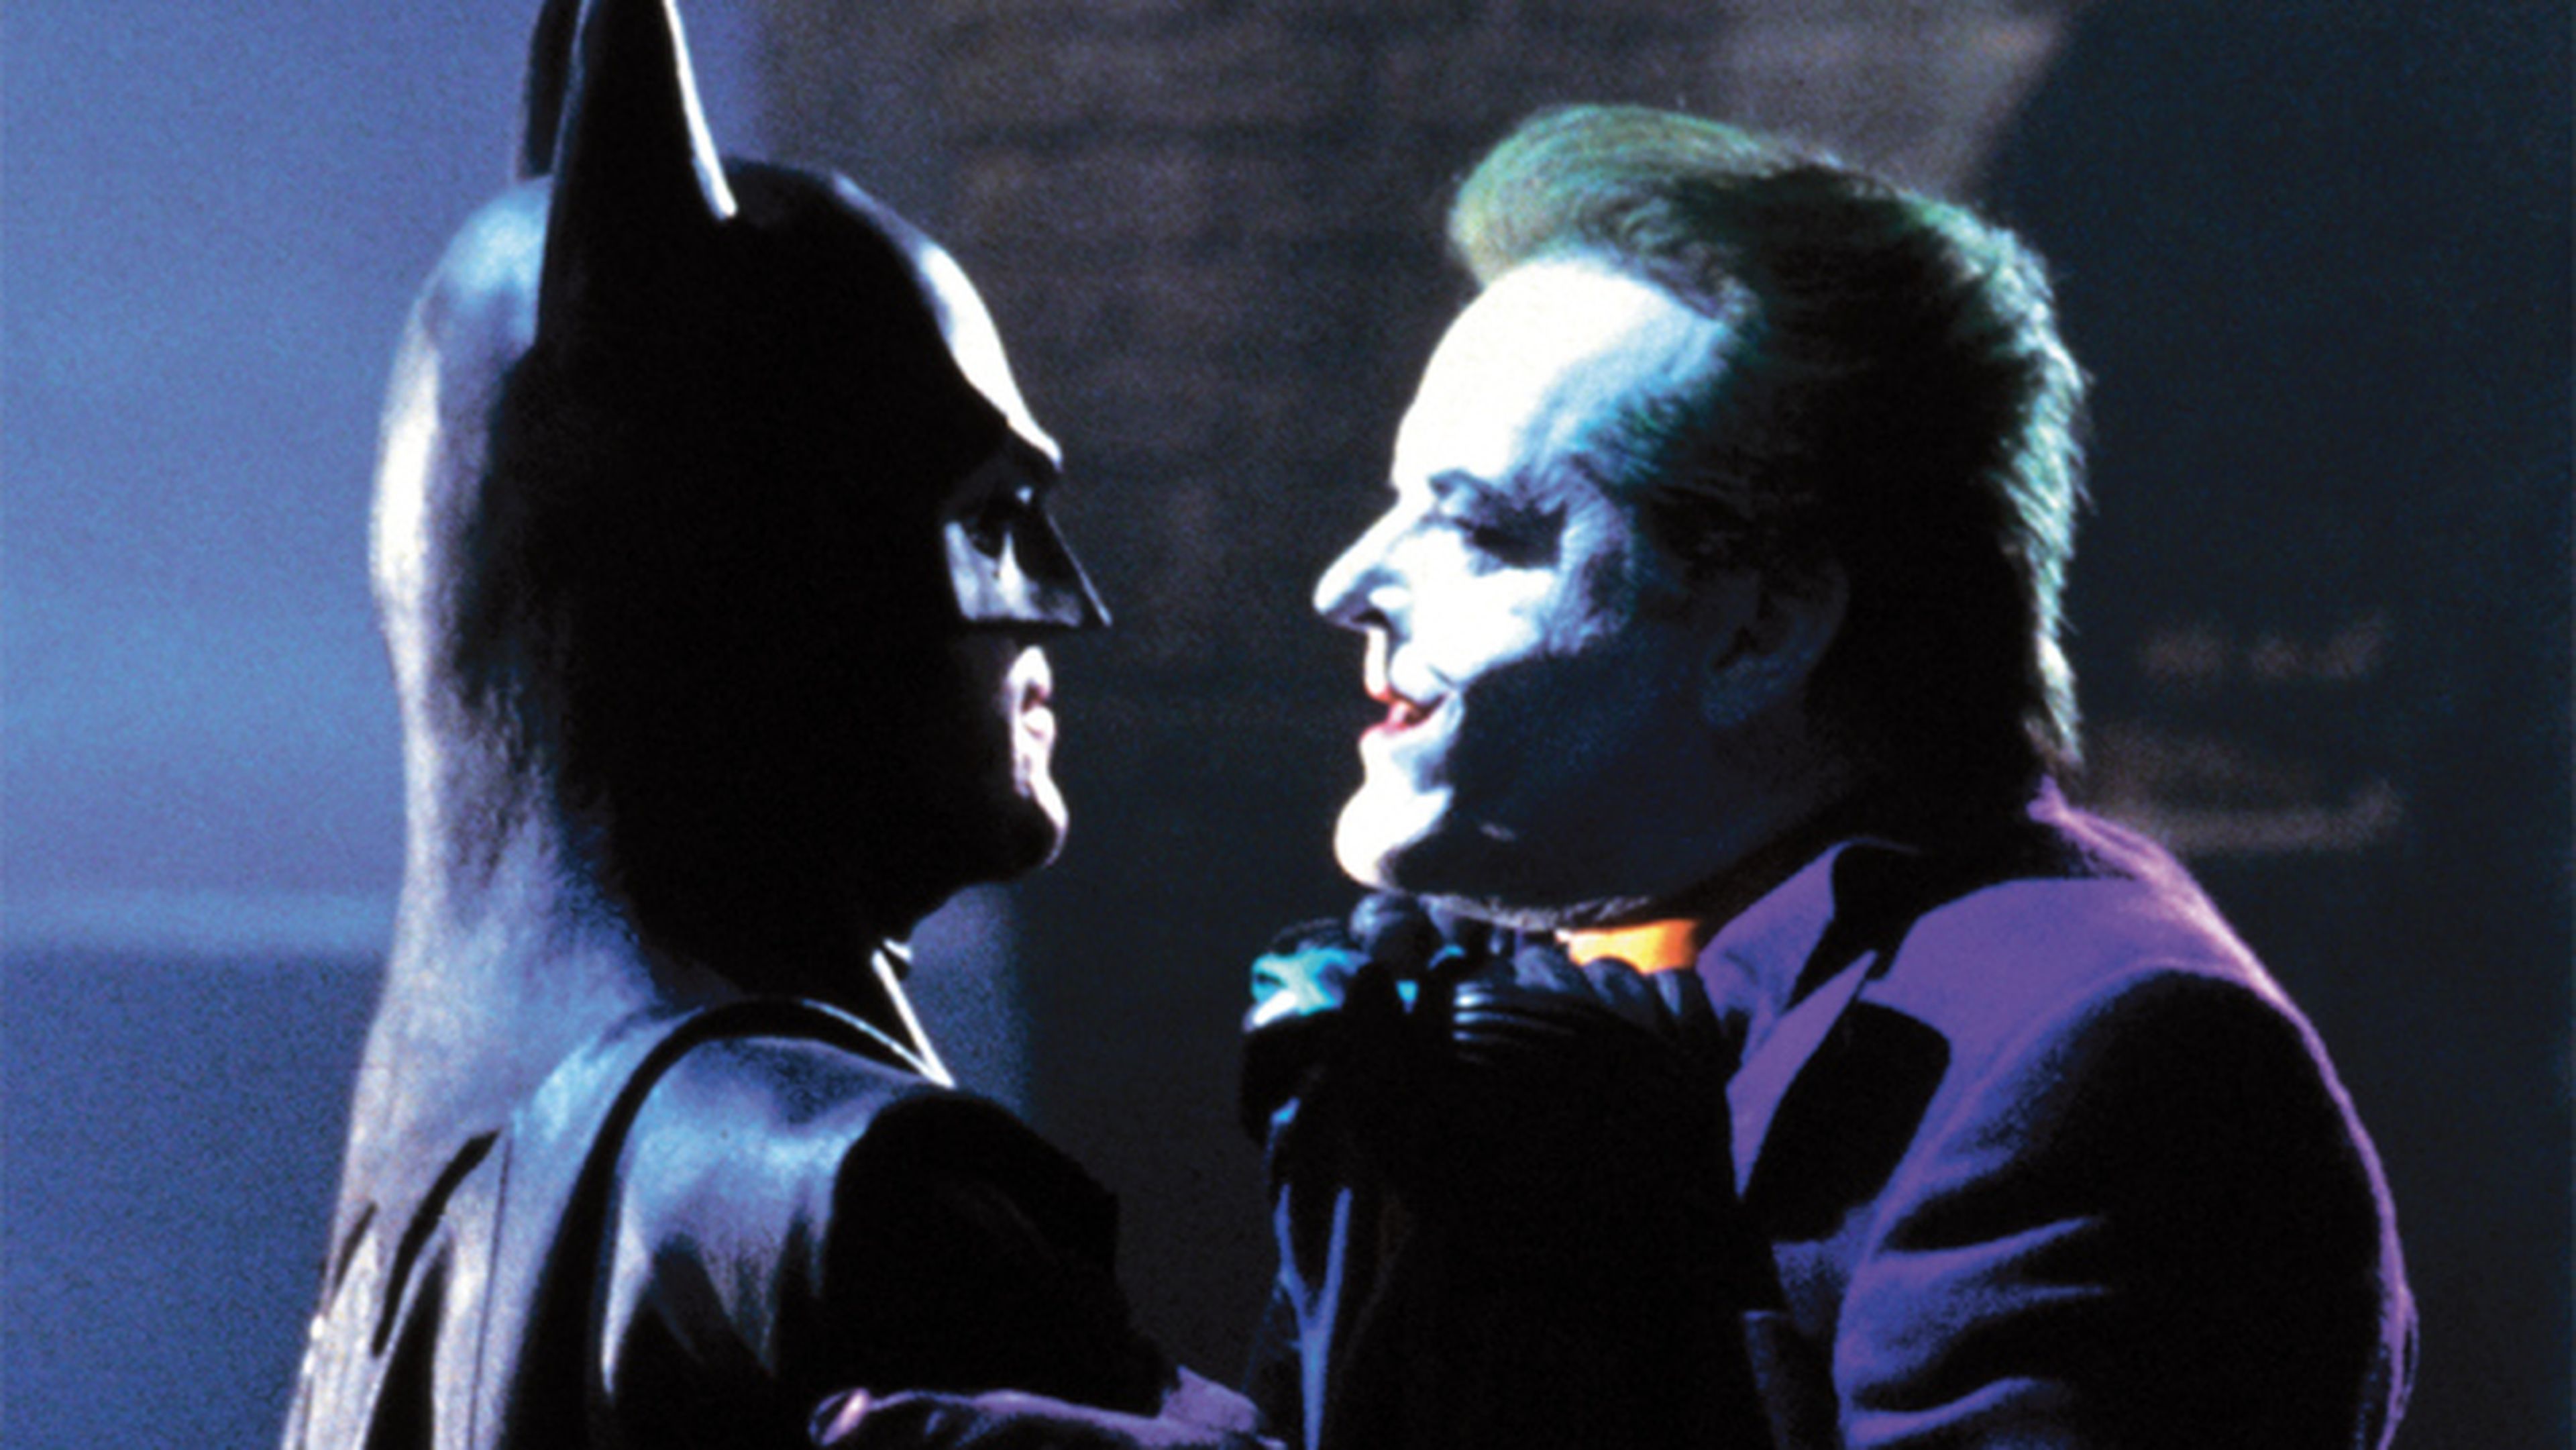 Cine de superhéroes: Crítica de Batman de Tim Burton